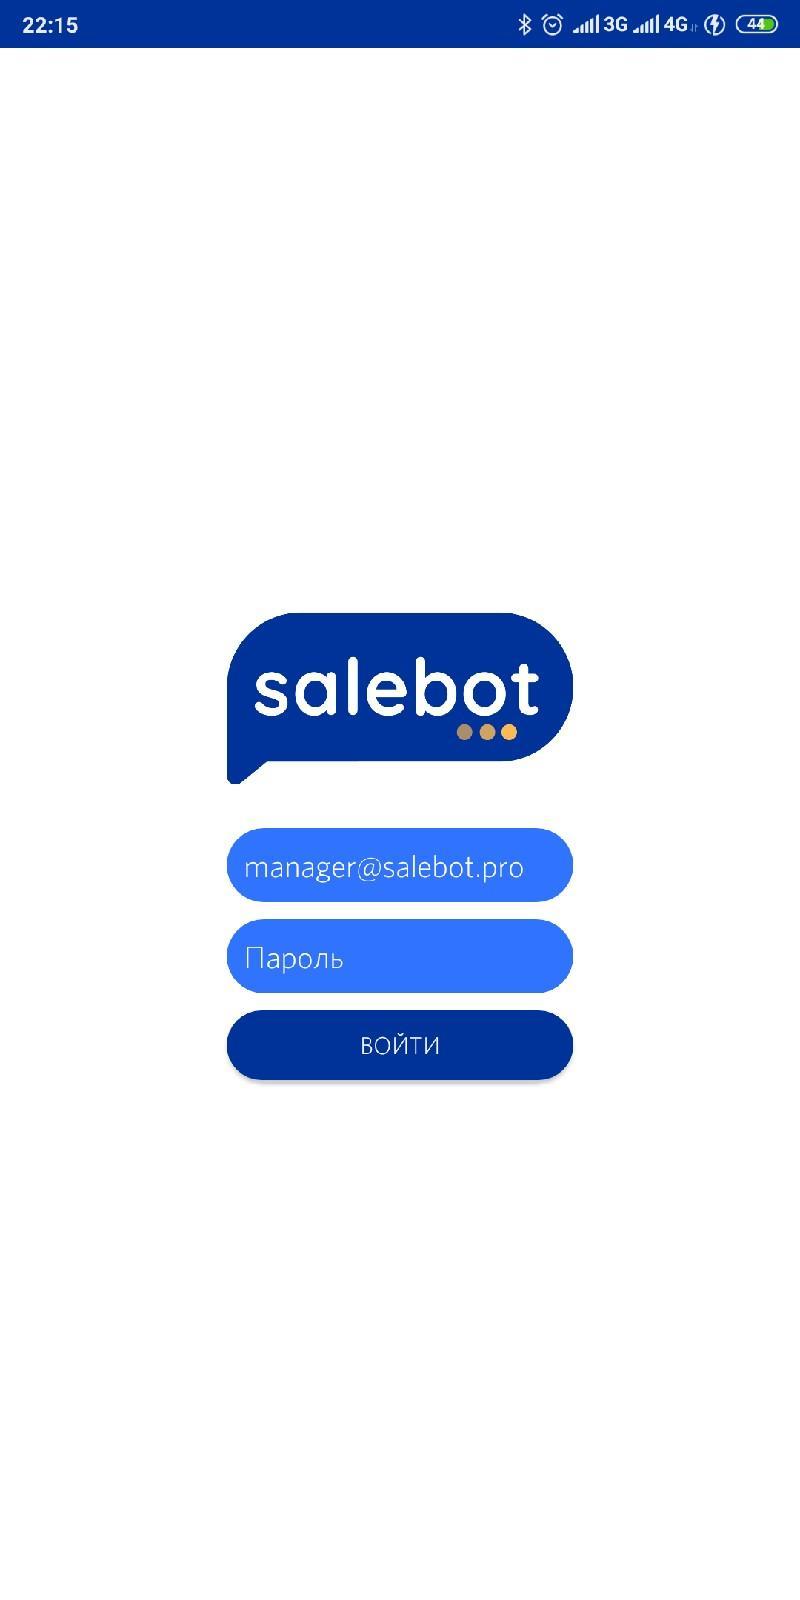 Https salebot site. Salebot. Salebot картинки. Шаблоны для Salebot. Salebot приложение для телефона.